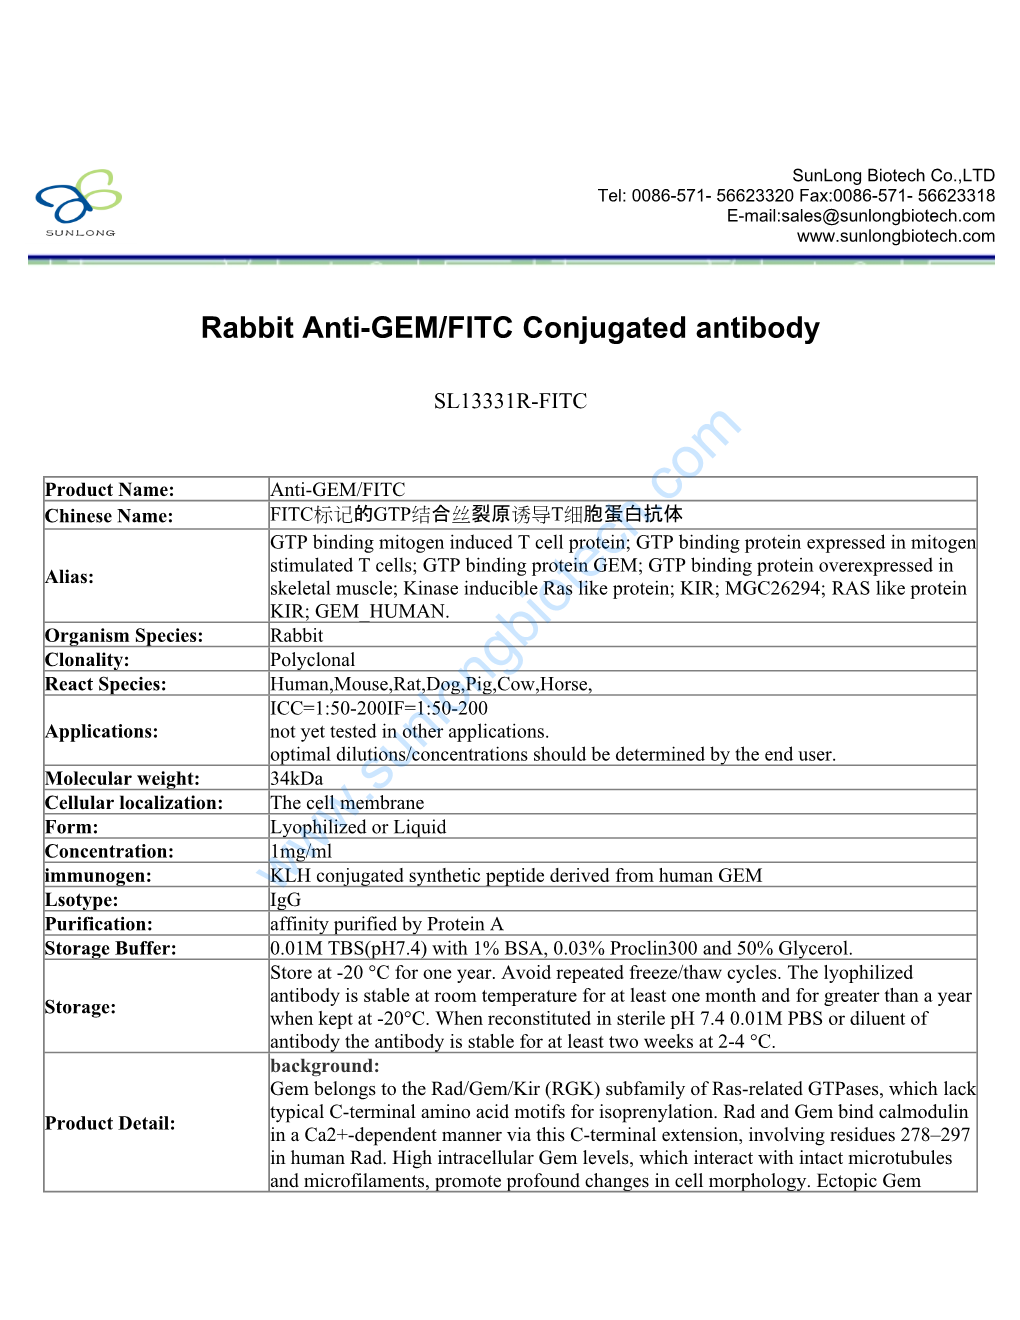 Rabbit Anti-GEM/FITC Conjugated Antibody-SL13331R-FITC